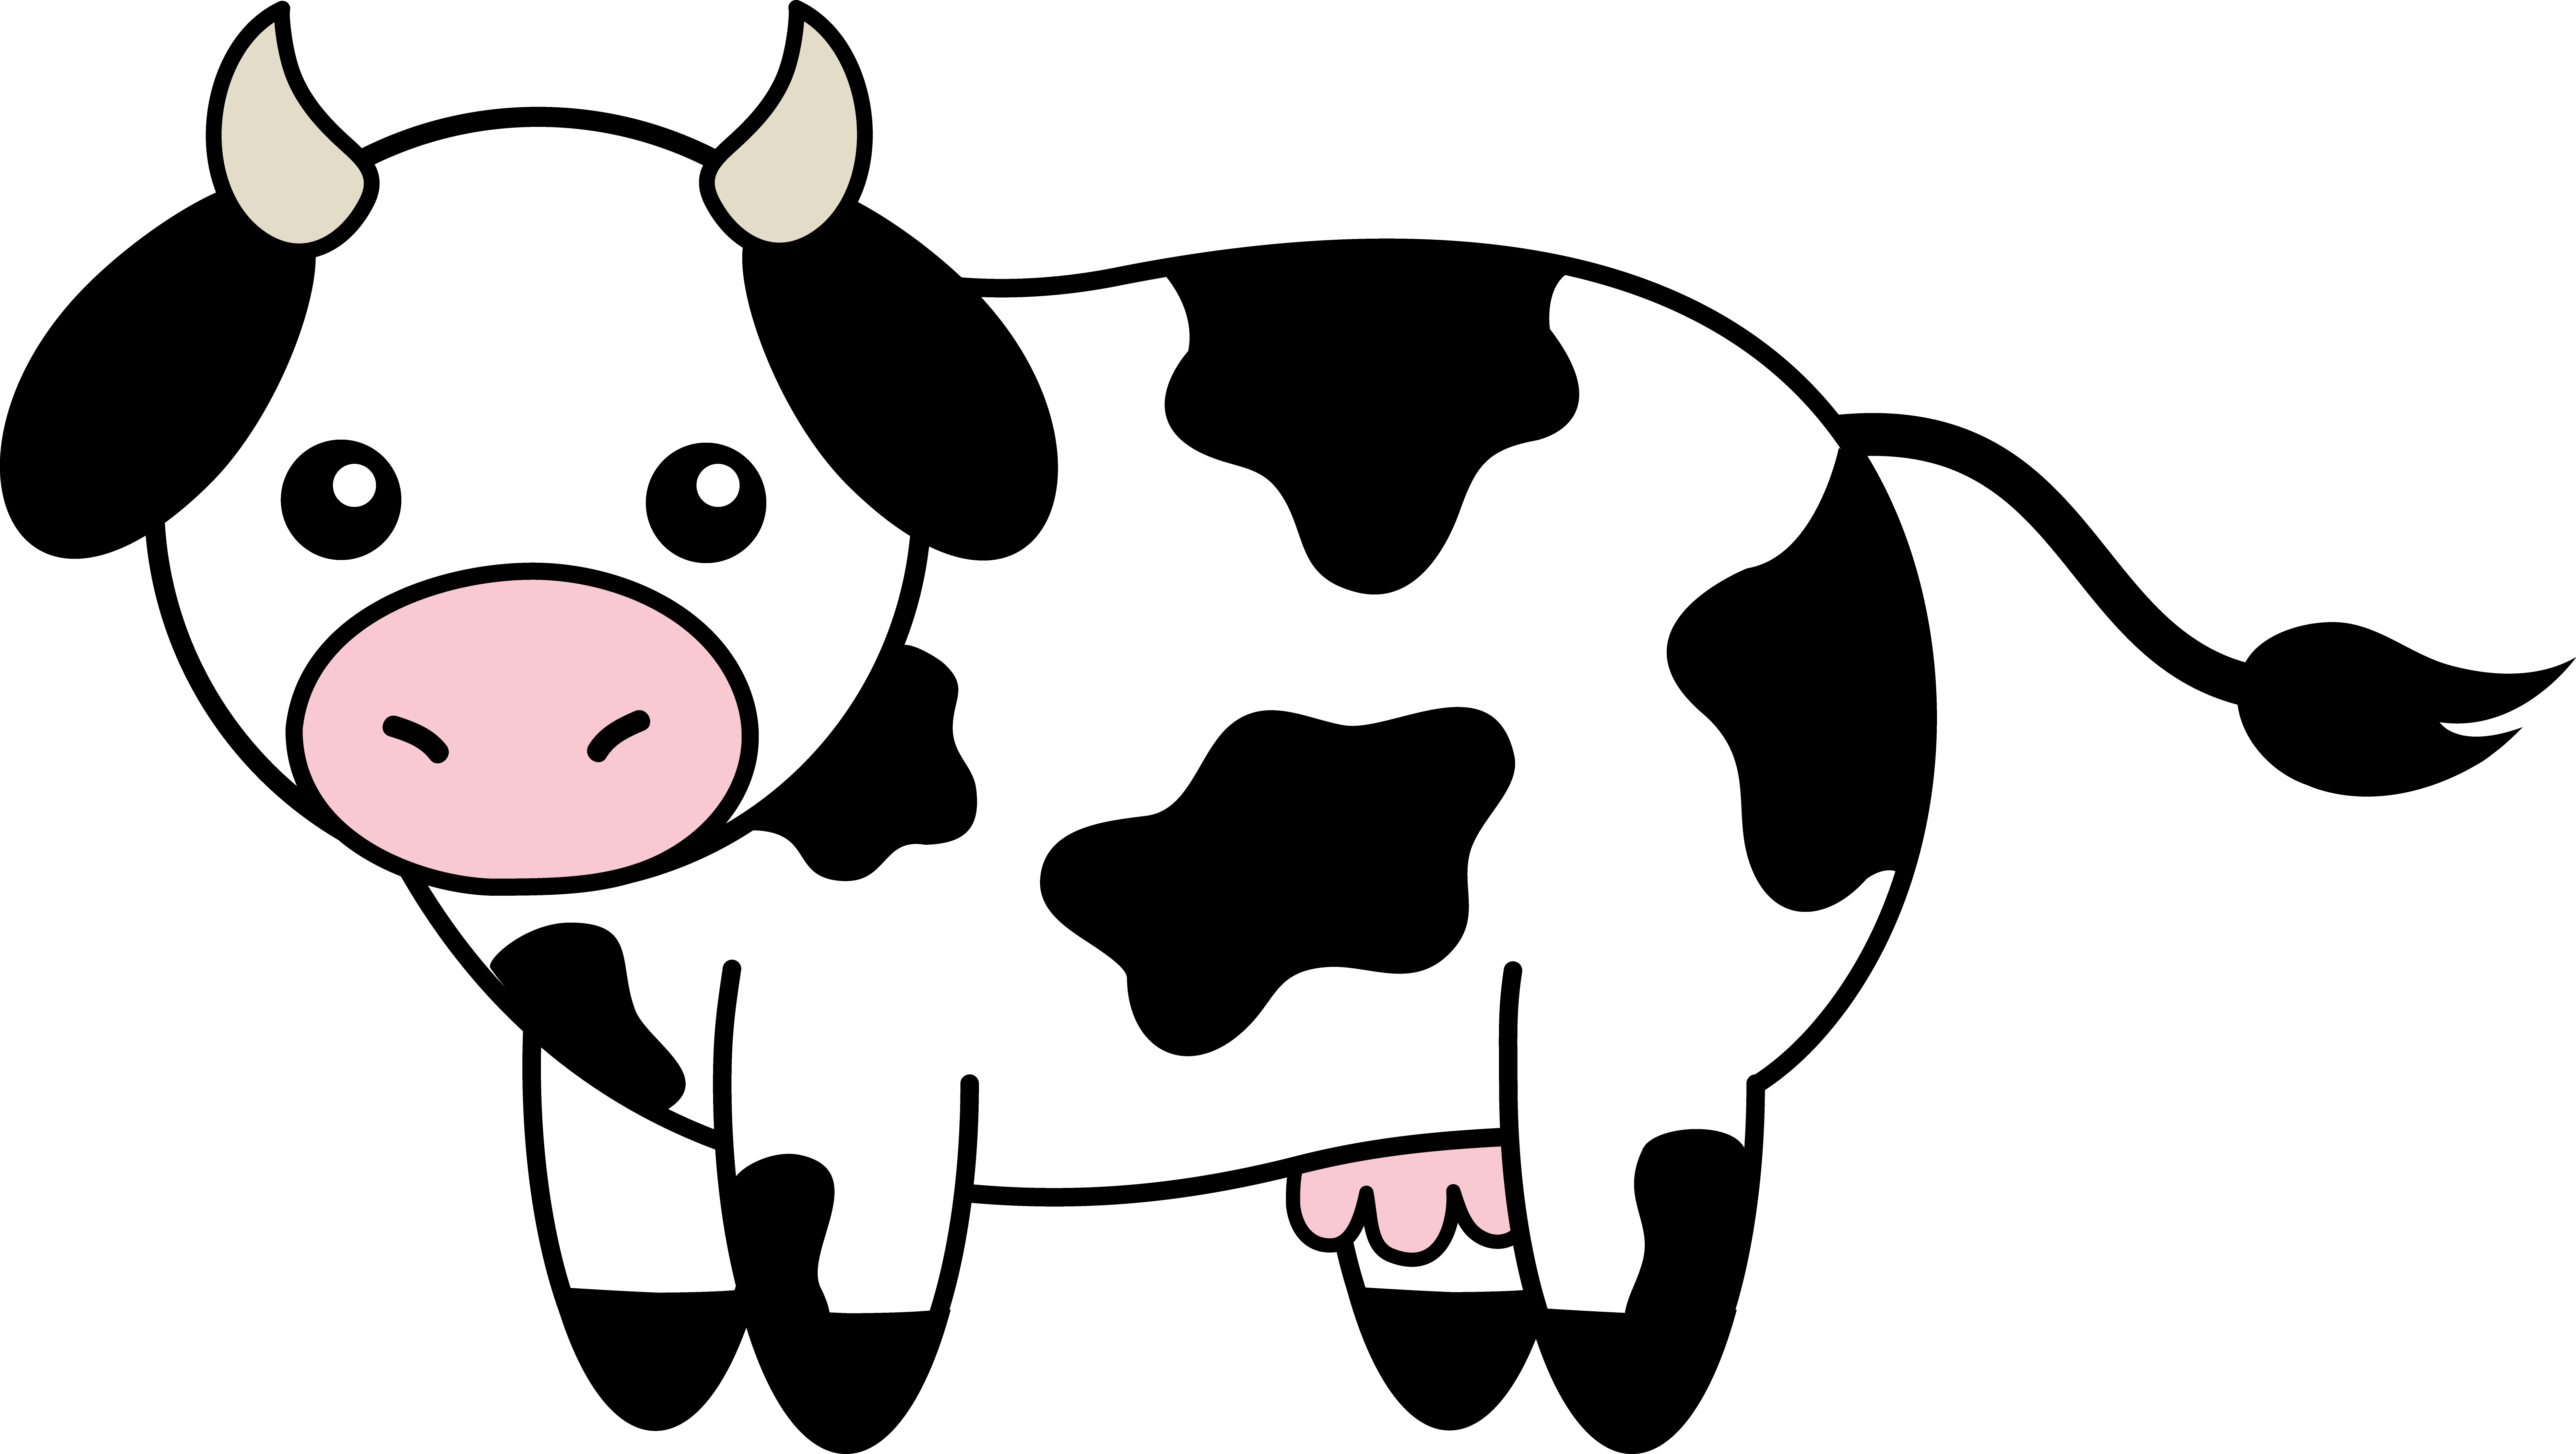 Clip Art Cows - Tumundografico